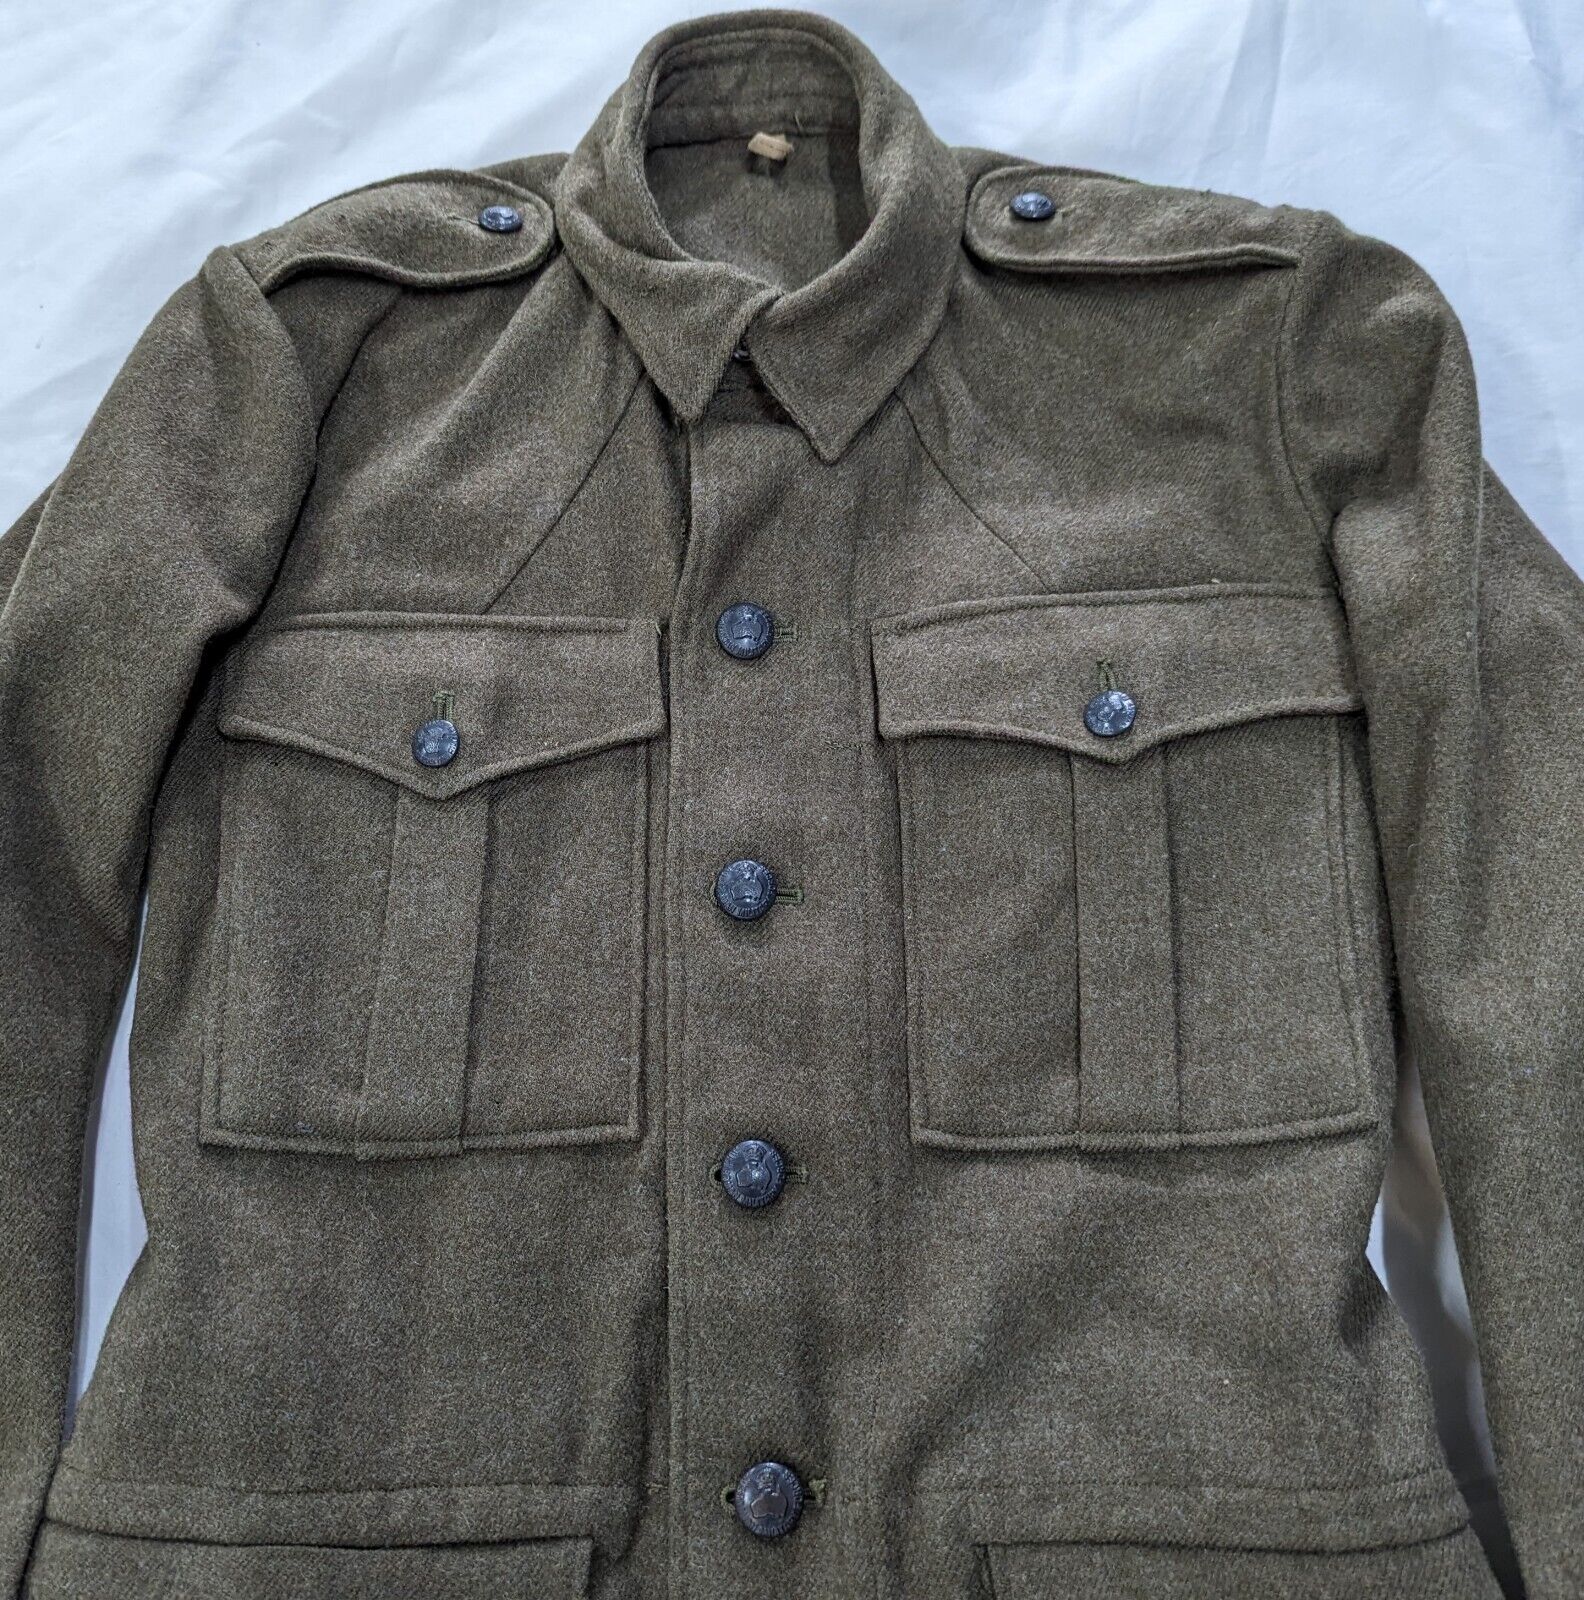 Obsolete vintage WW2 1943 Australian army AIF uniform tunic jacket